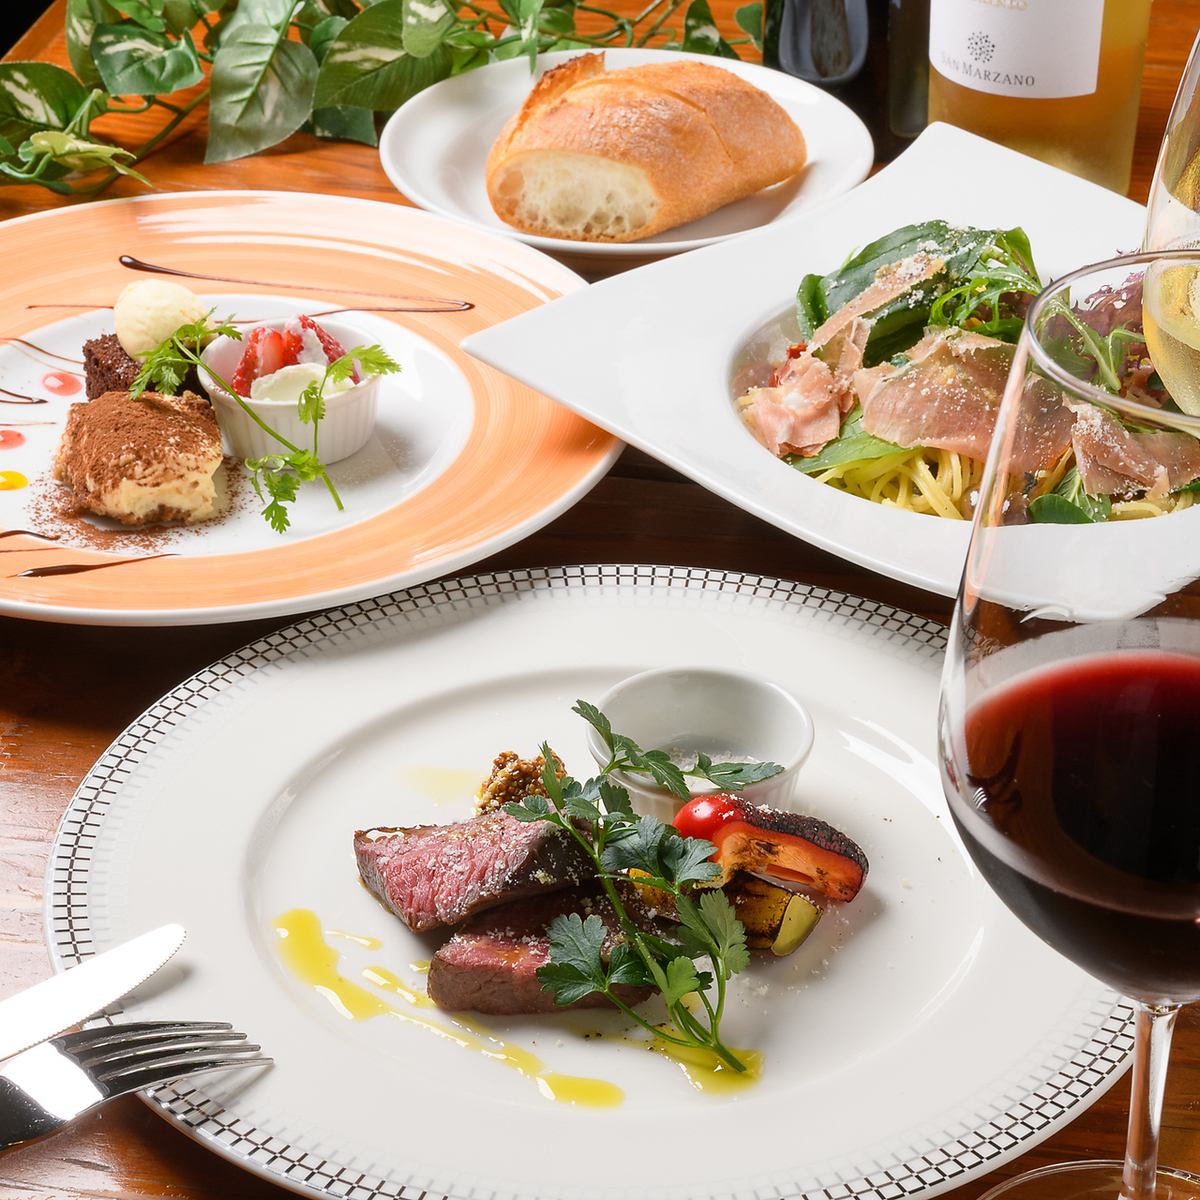 [Retreat for adults] A stylish and calm Italian dining bar.Enjoy creative cuisine ◎